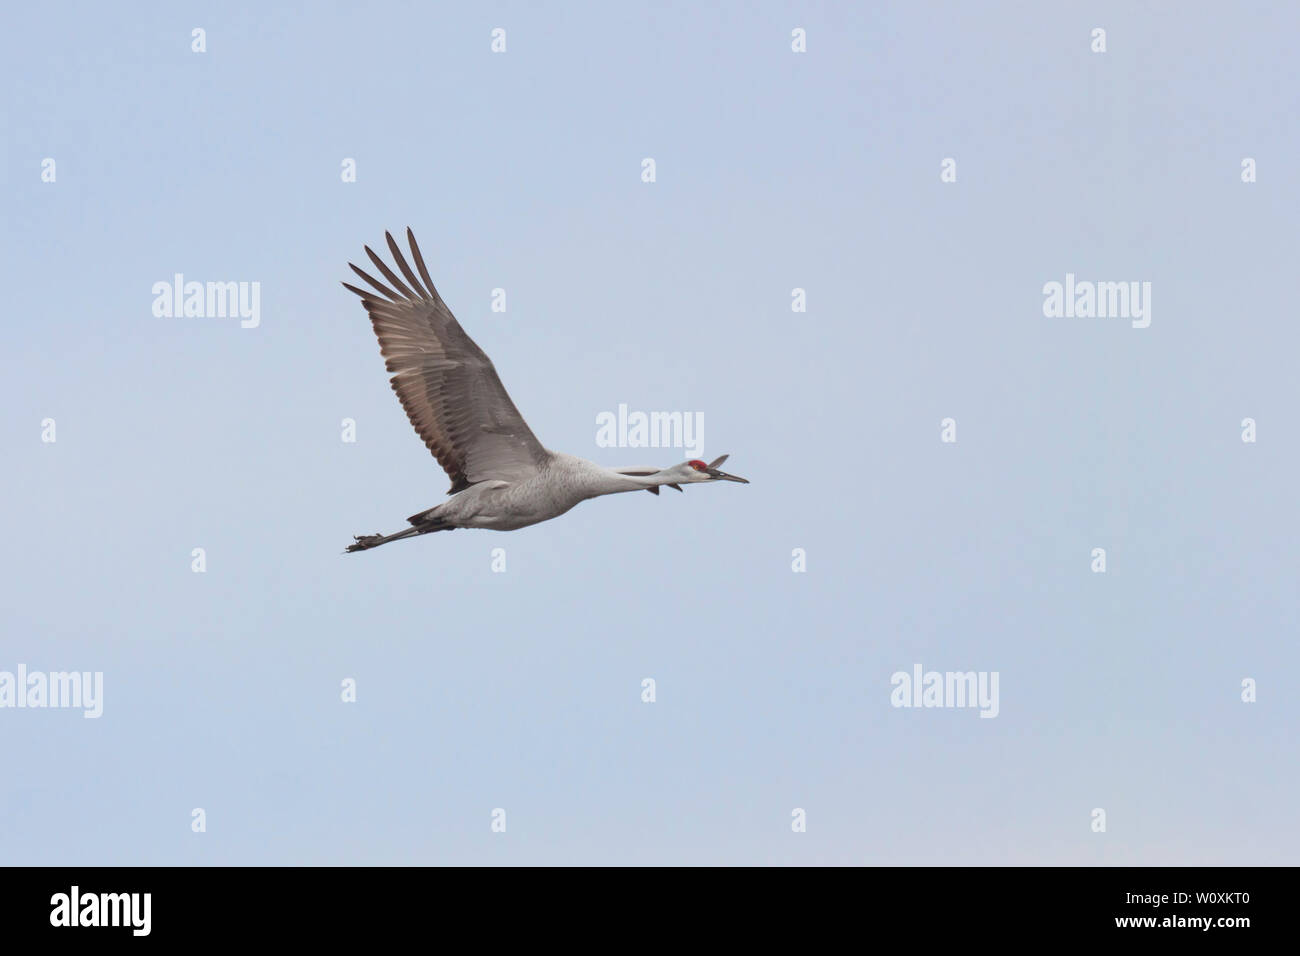 A spread winged sandhill crane flies across a light blue sky Stock Photo